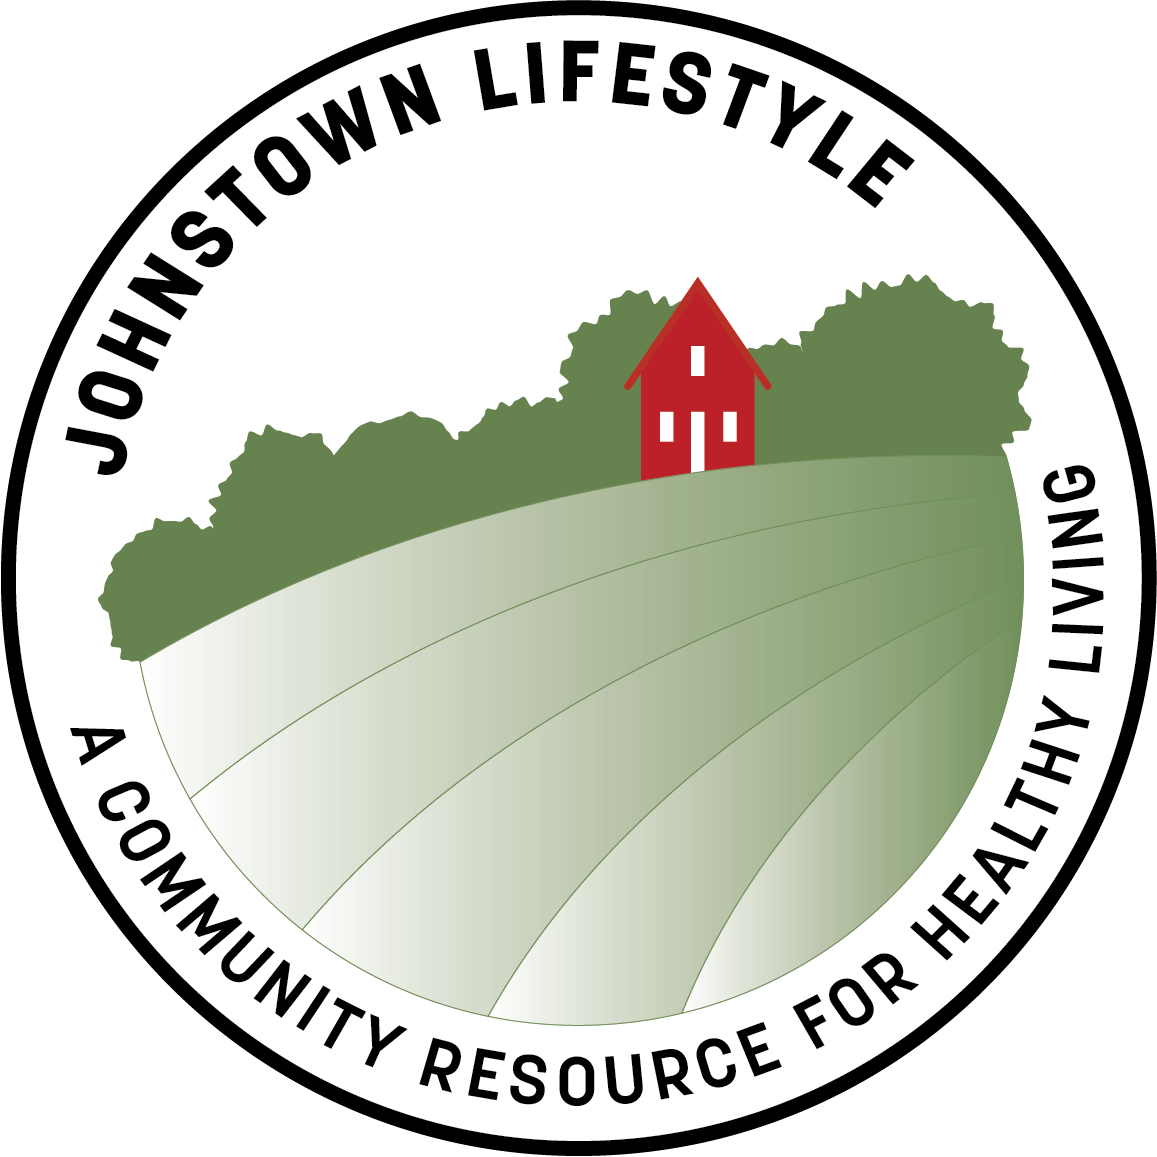 Johnstown Lifestyle